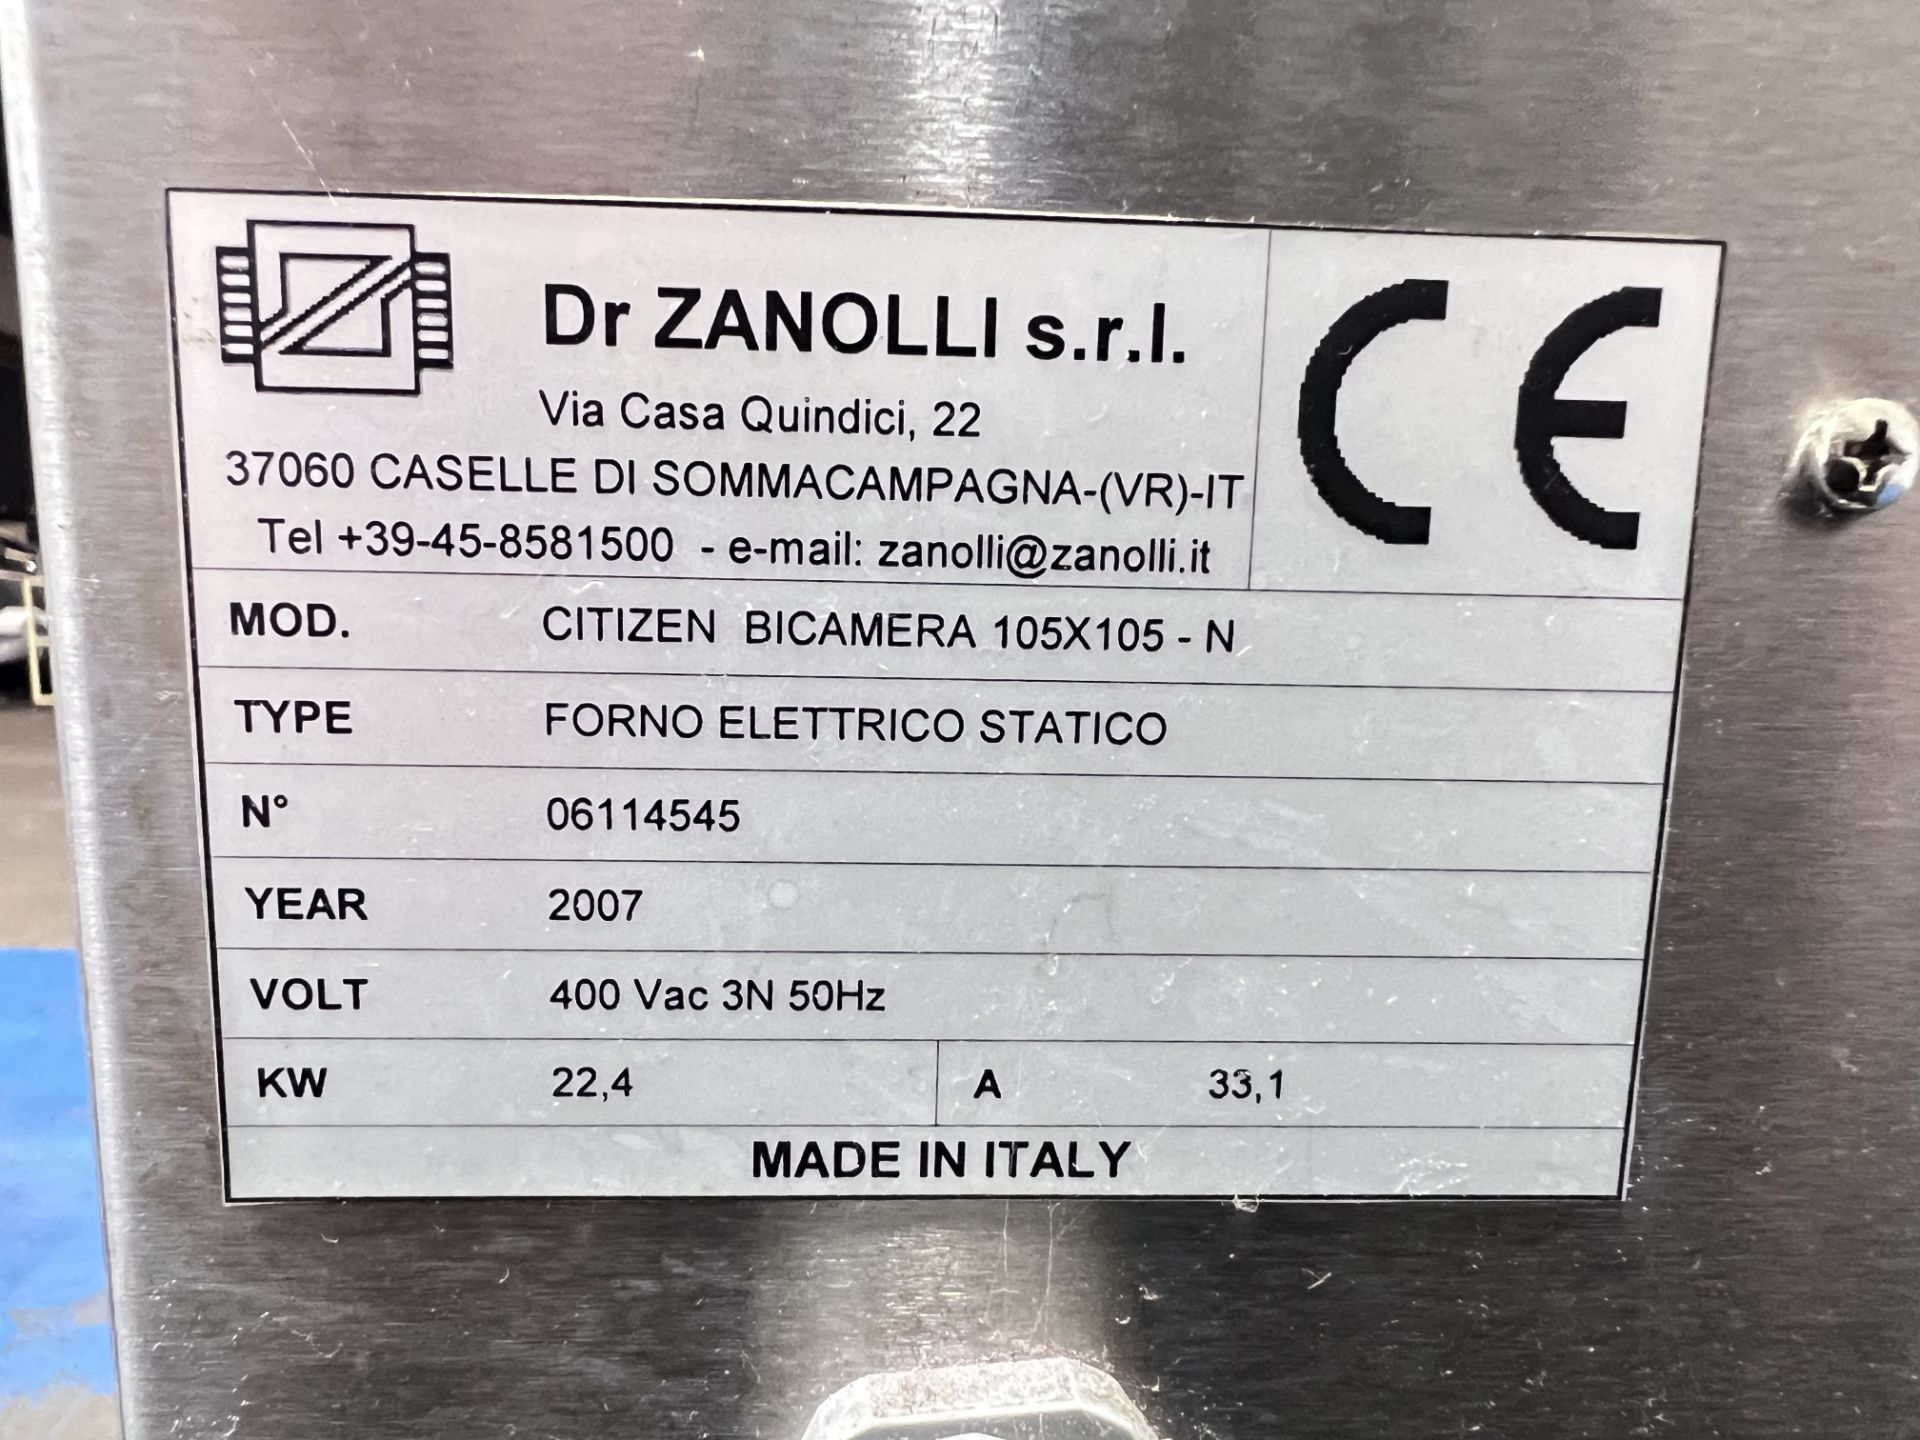 Zanolli Citizen Bicamera 105 x 1054 - N Pizza Pie Double Electric Oven - Image 8 of 8